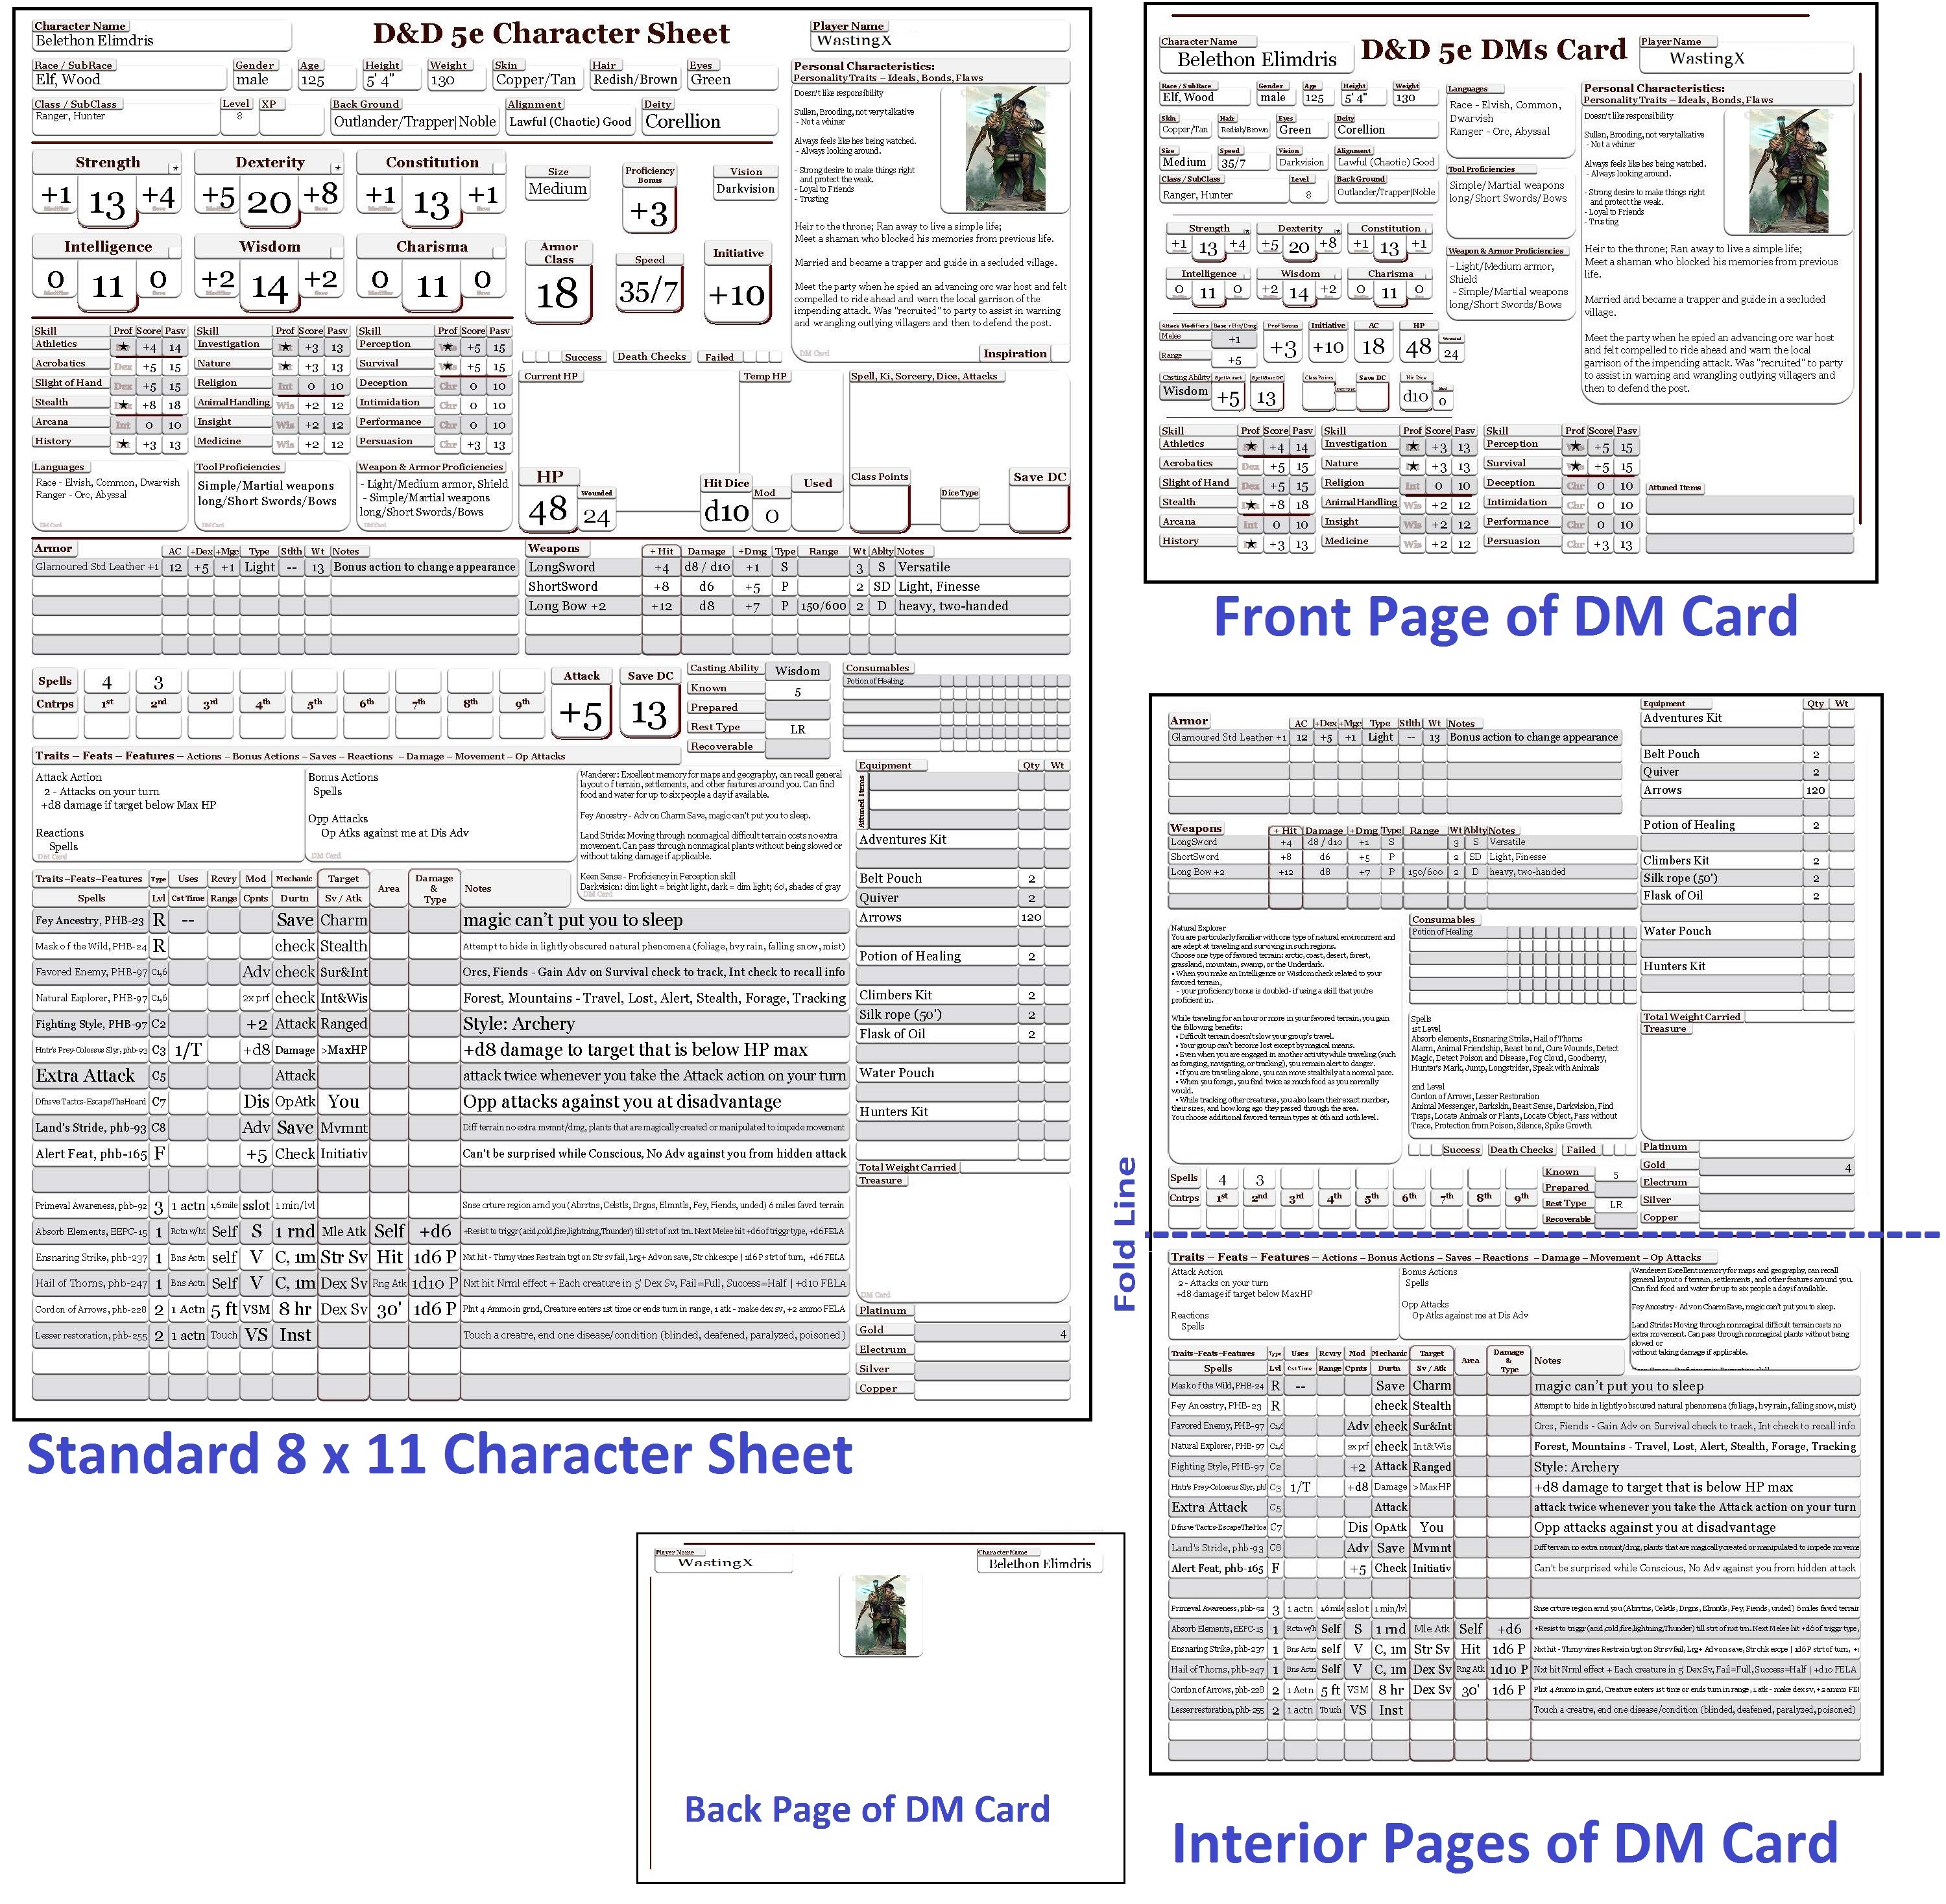 5284-Example - D&D 5E Character Sheet+DM Card - Pic.jpg.